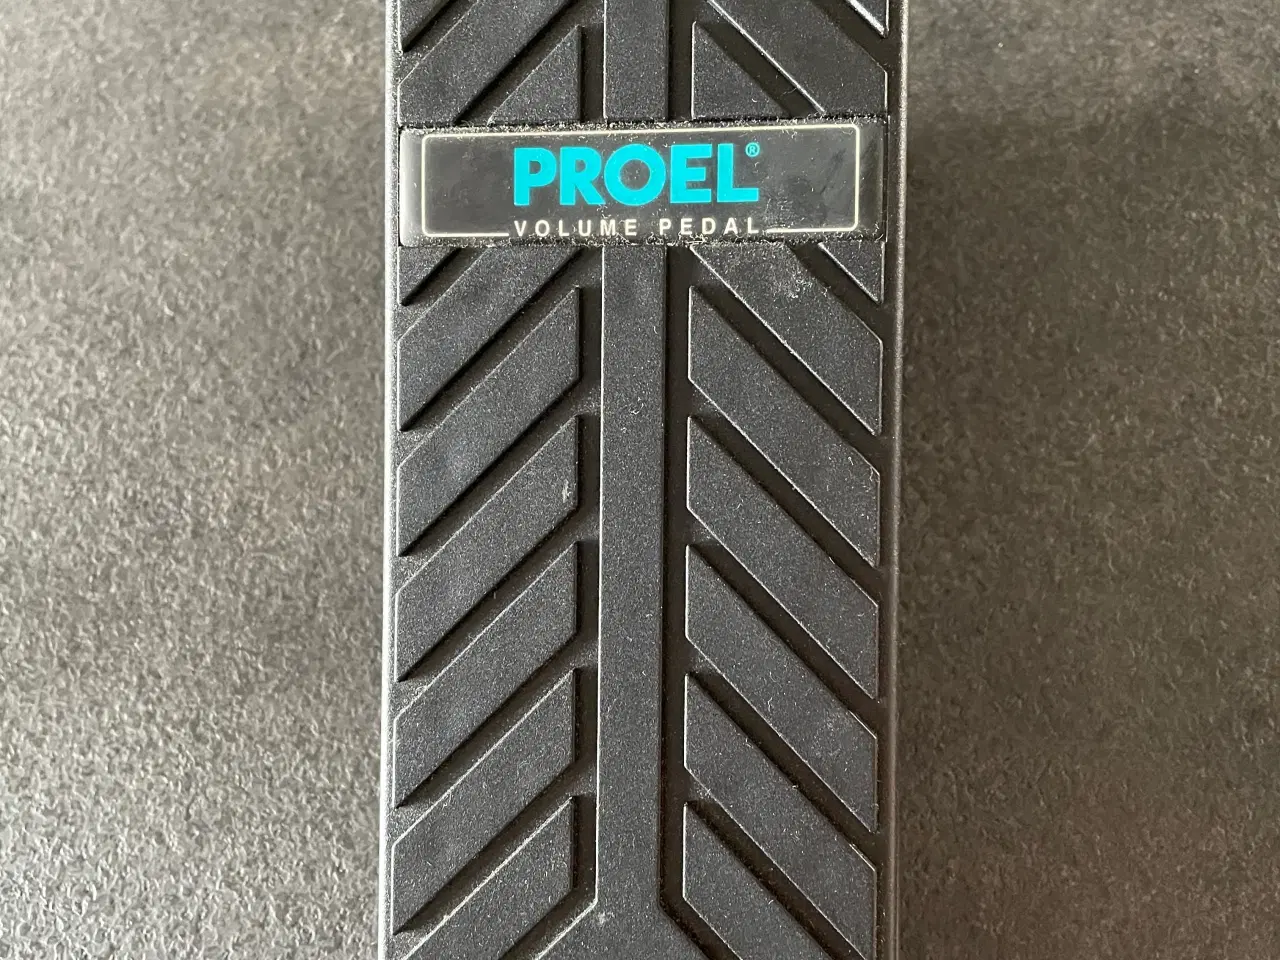 Billede 1 - Proel Volume pedal